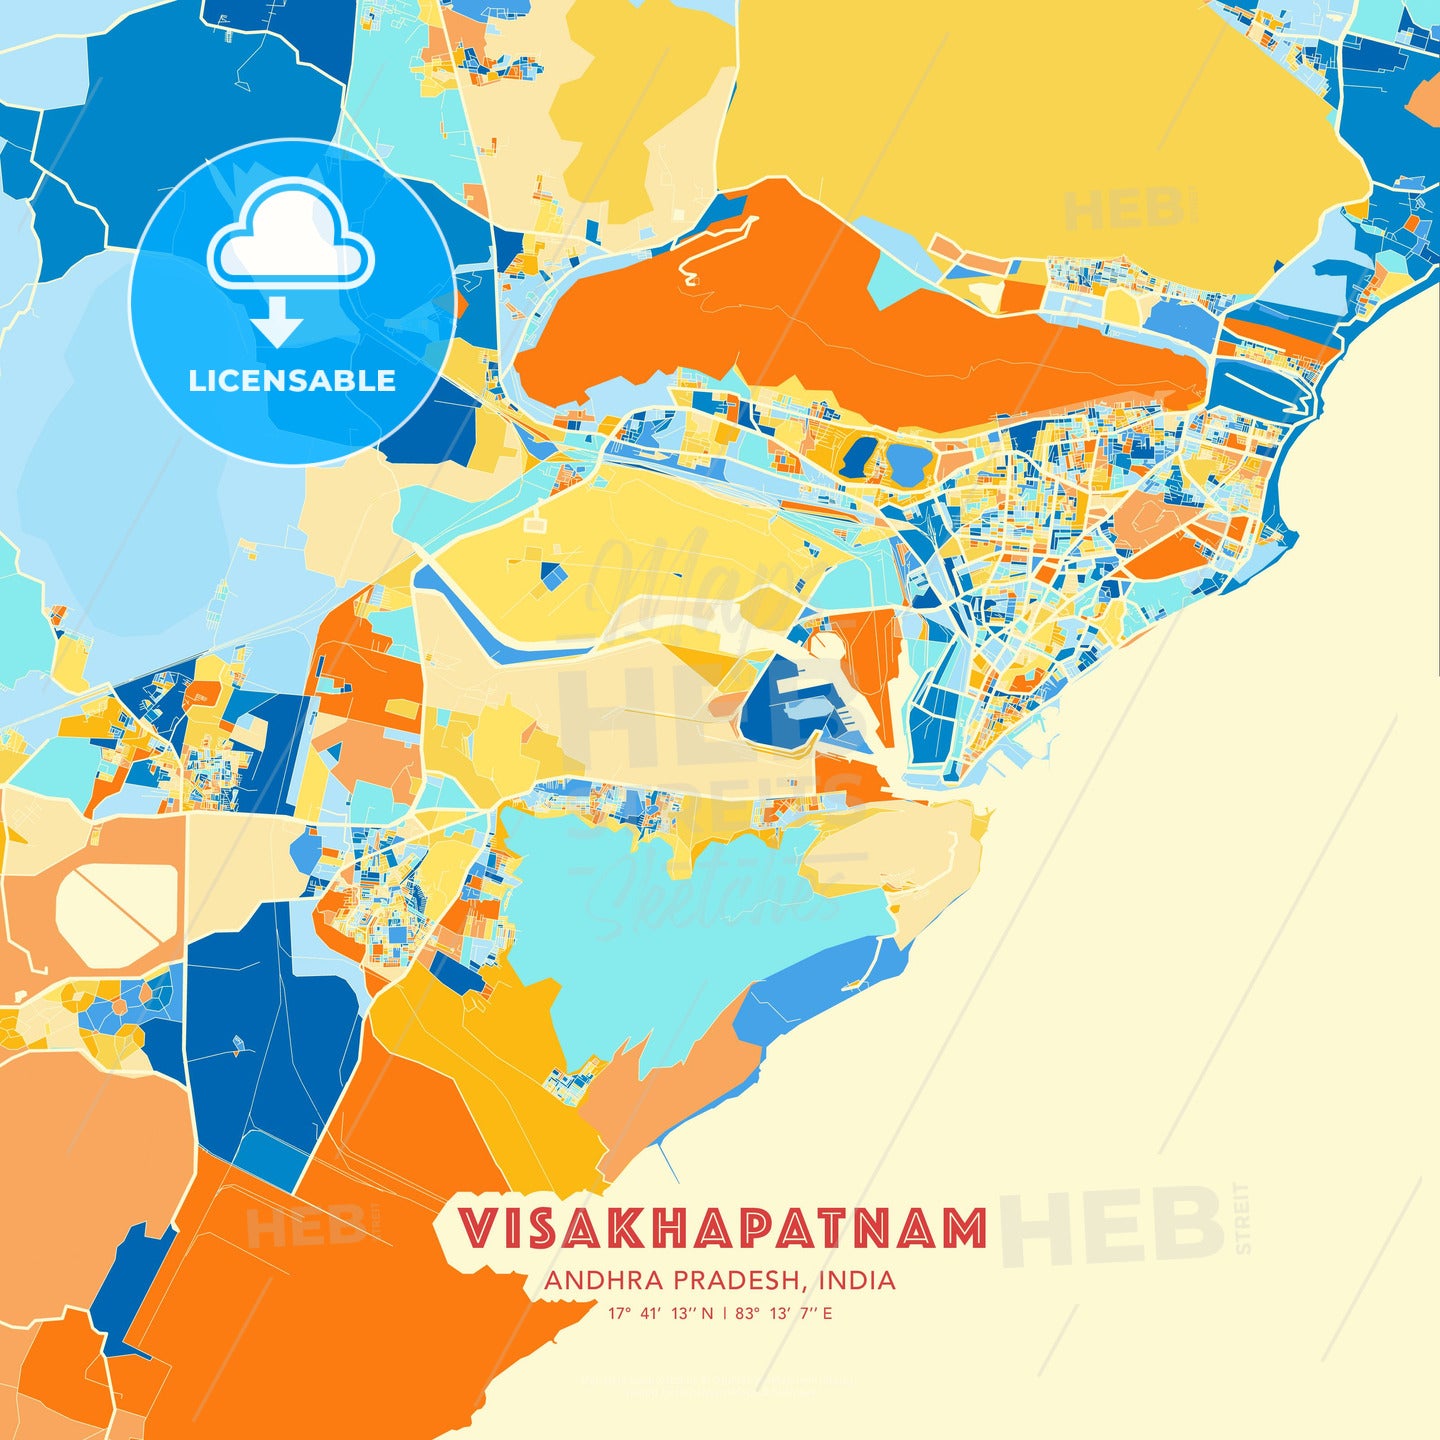 Visakhapatnam, Andhra Pradesh, India, map - HEBSTREITS Sketches